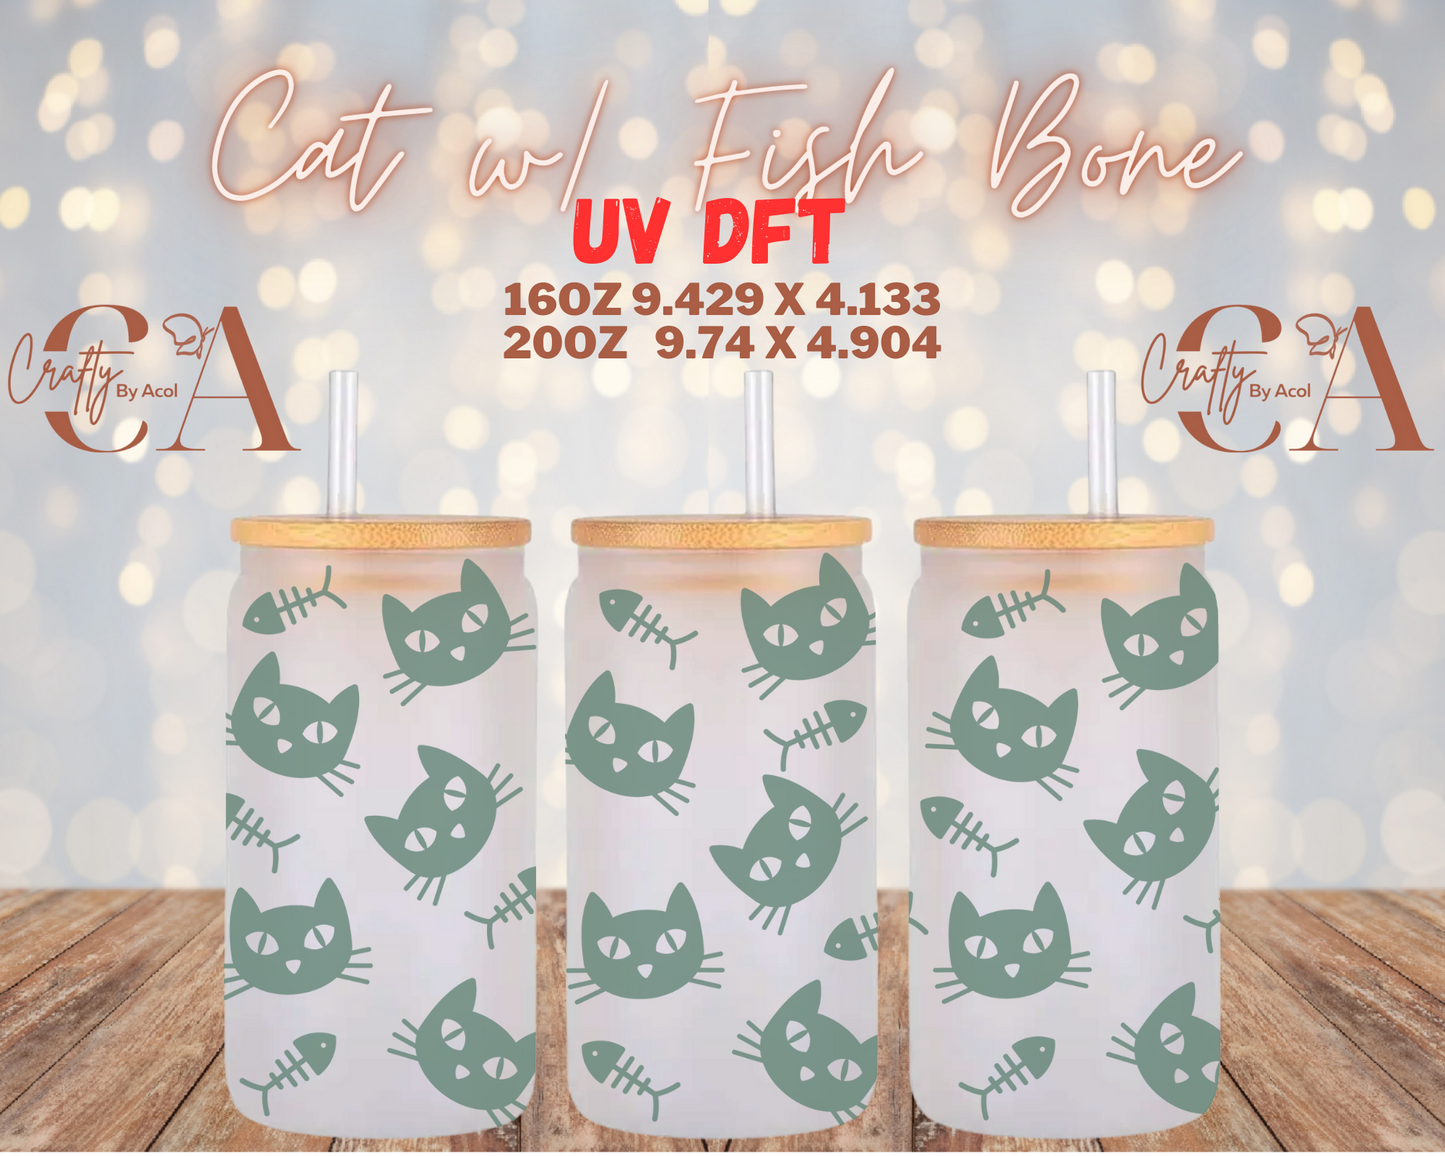 Cat with Fish Bone UV DFT Cup Wrap